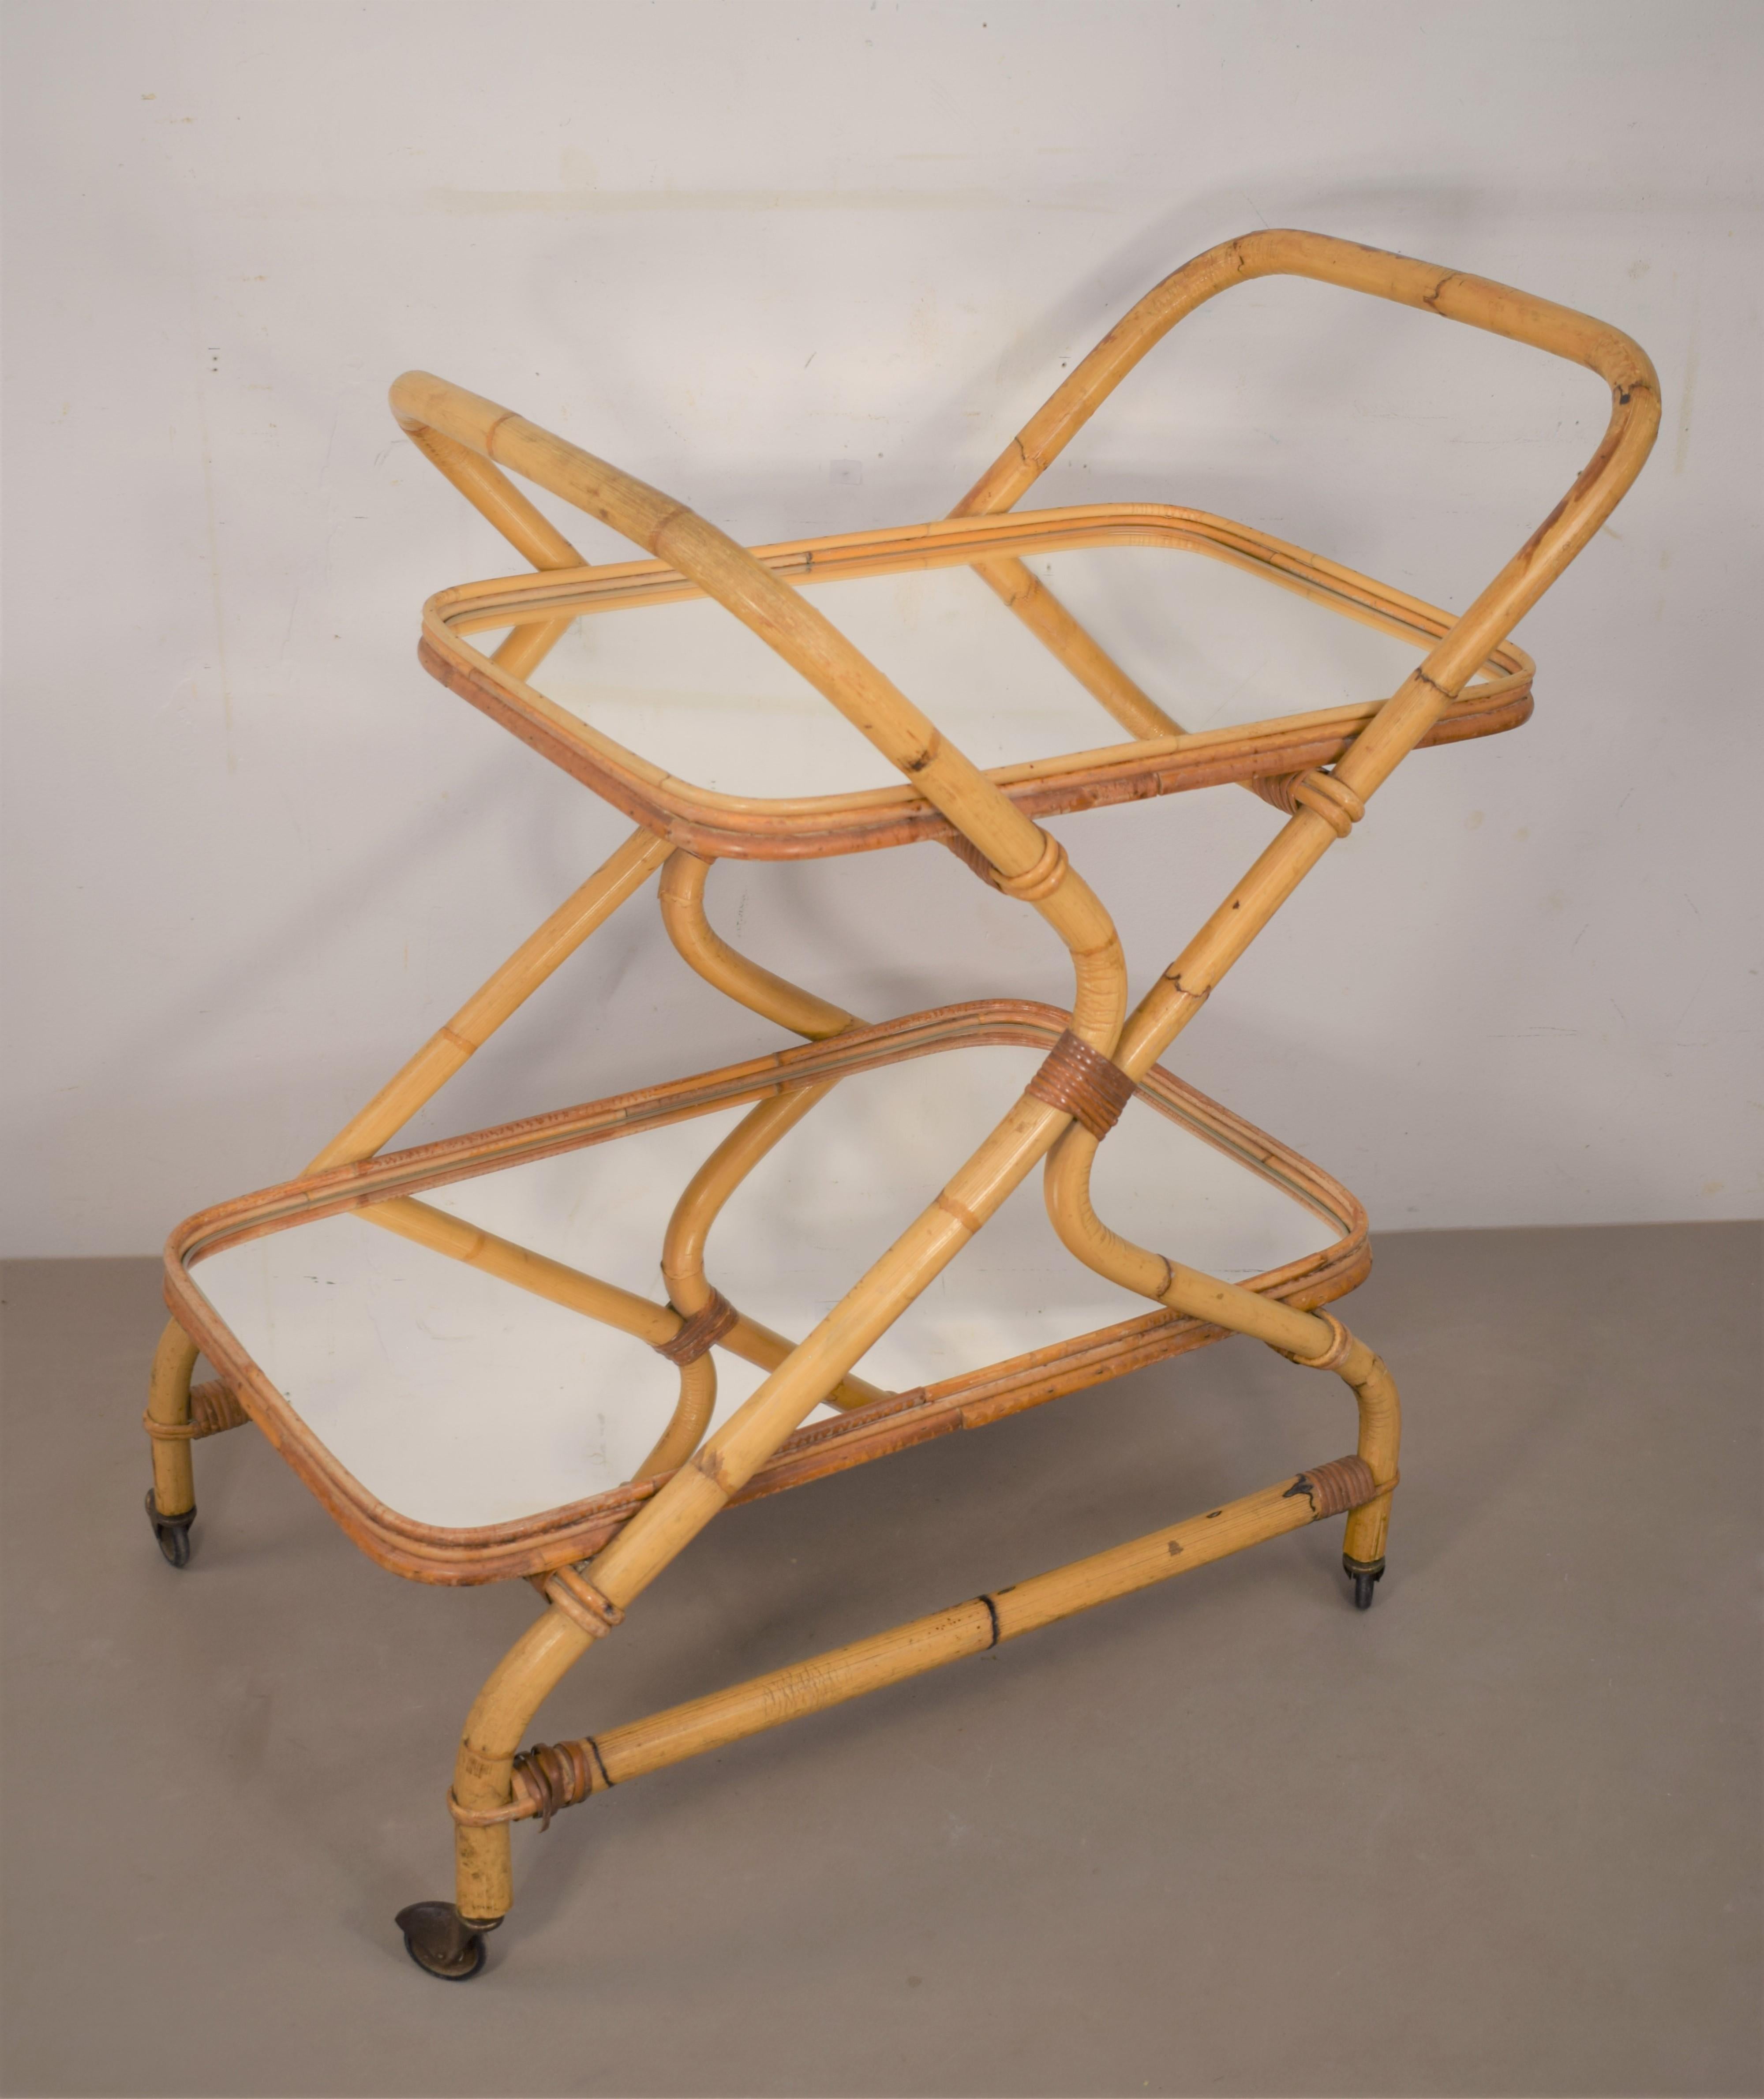 Italian bamboo and mirrors bar cart, 1960s.
Dimensions: H= 82 cm; W= 83 cm; D= 48 cm.